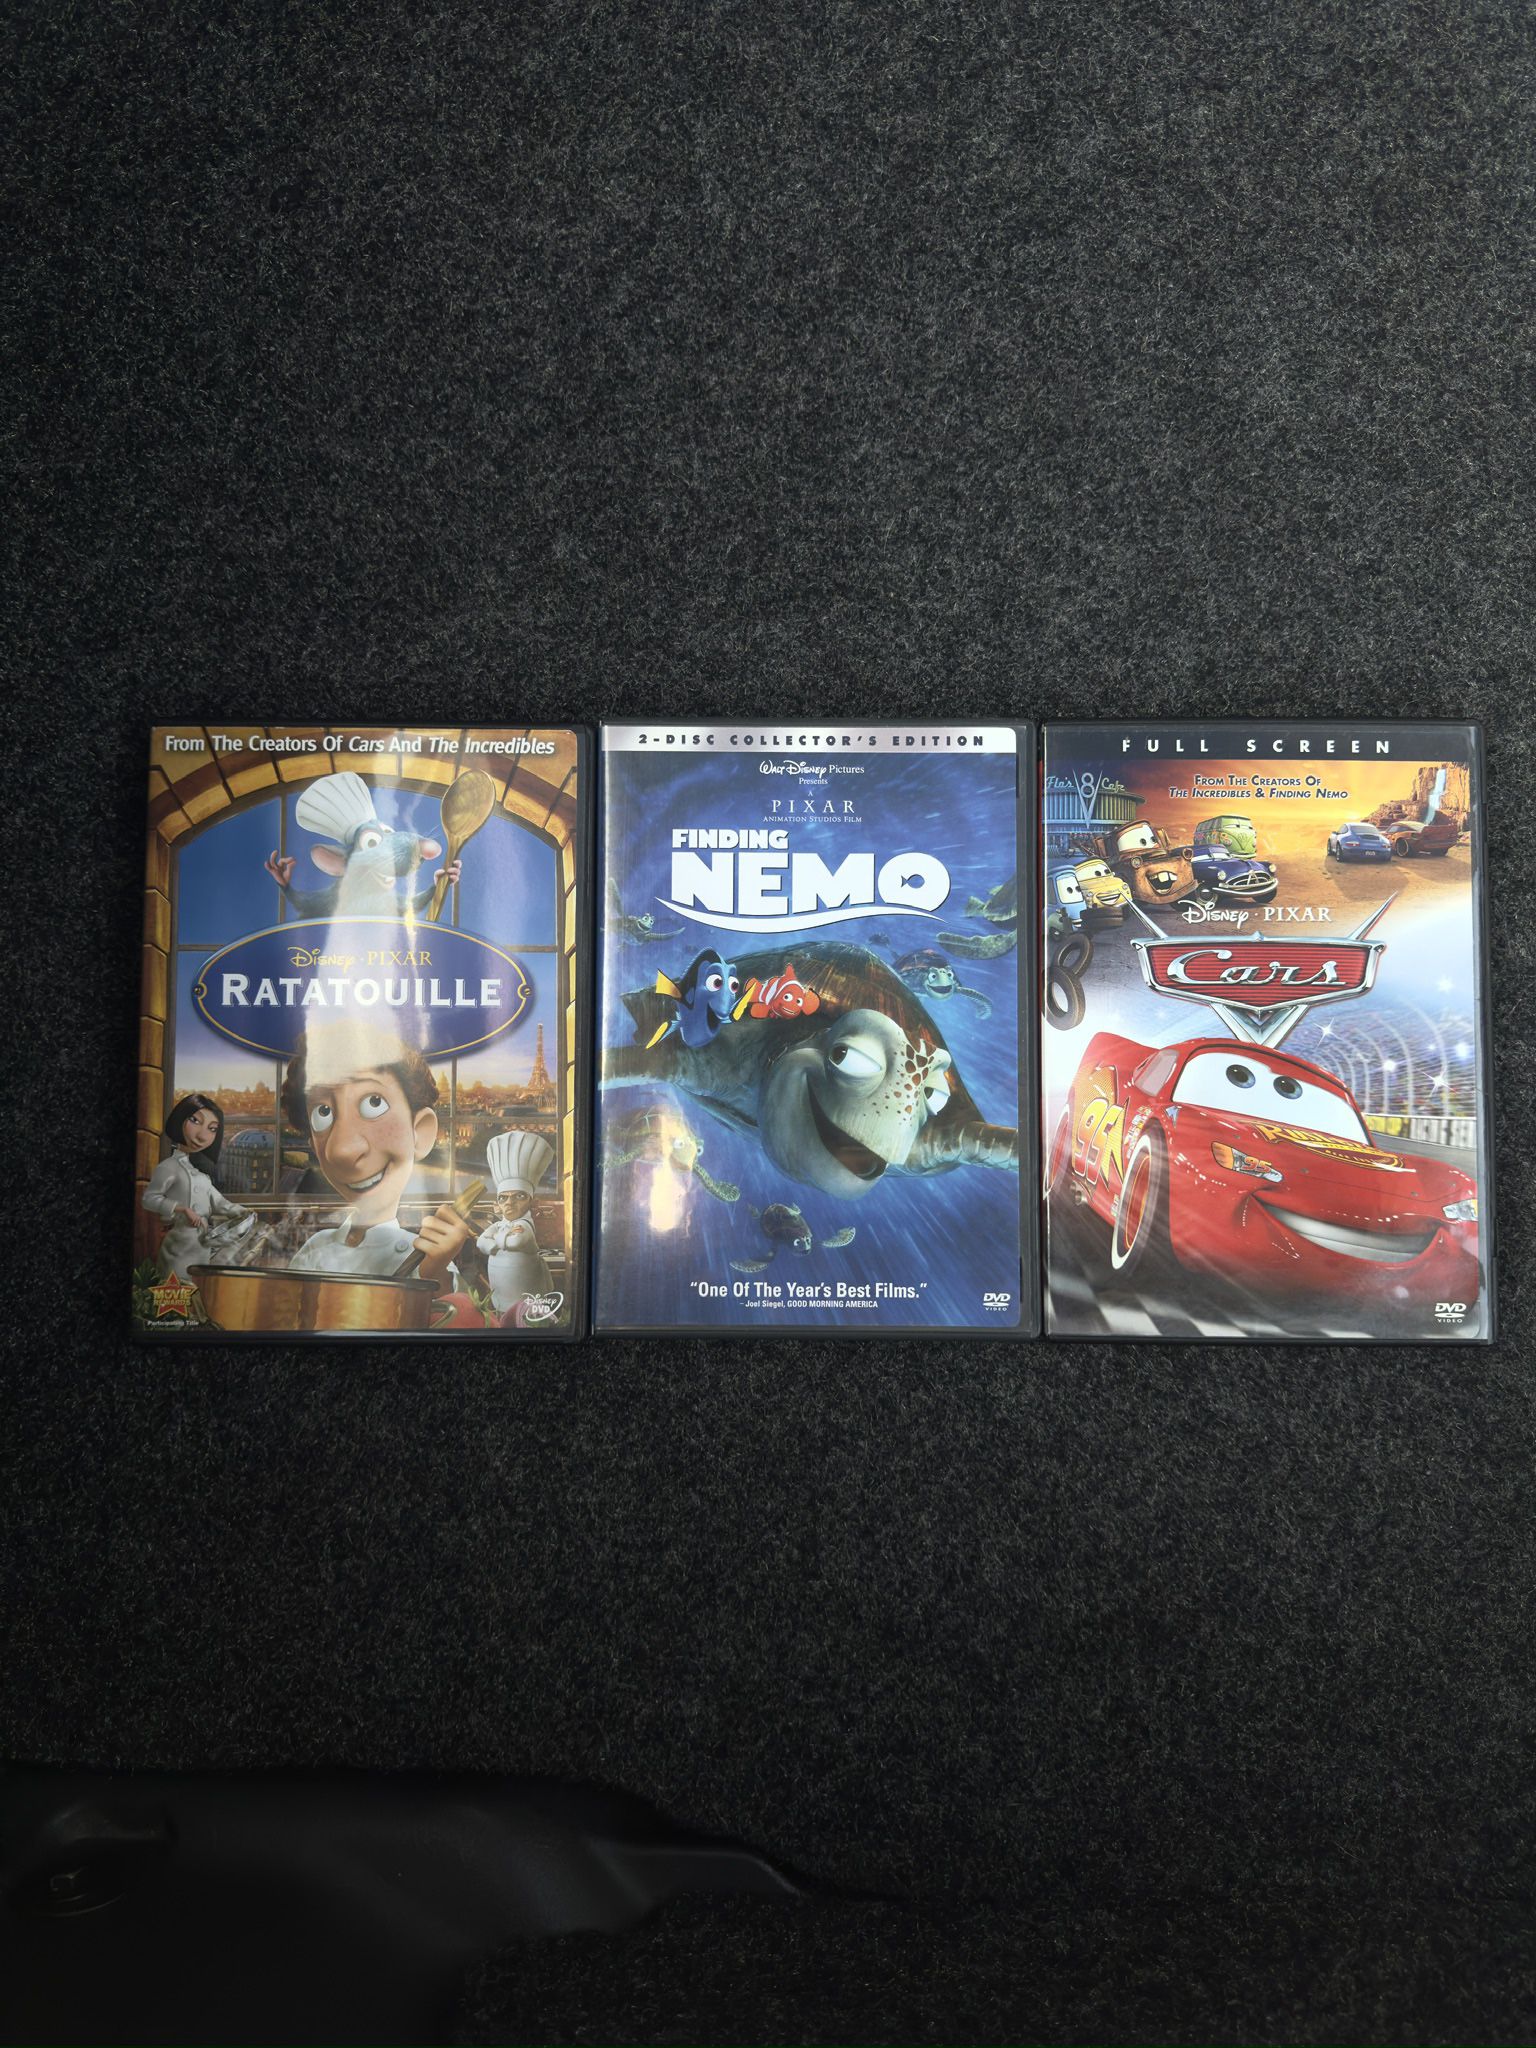 Set Of 3 Disney DVD Movies 